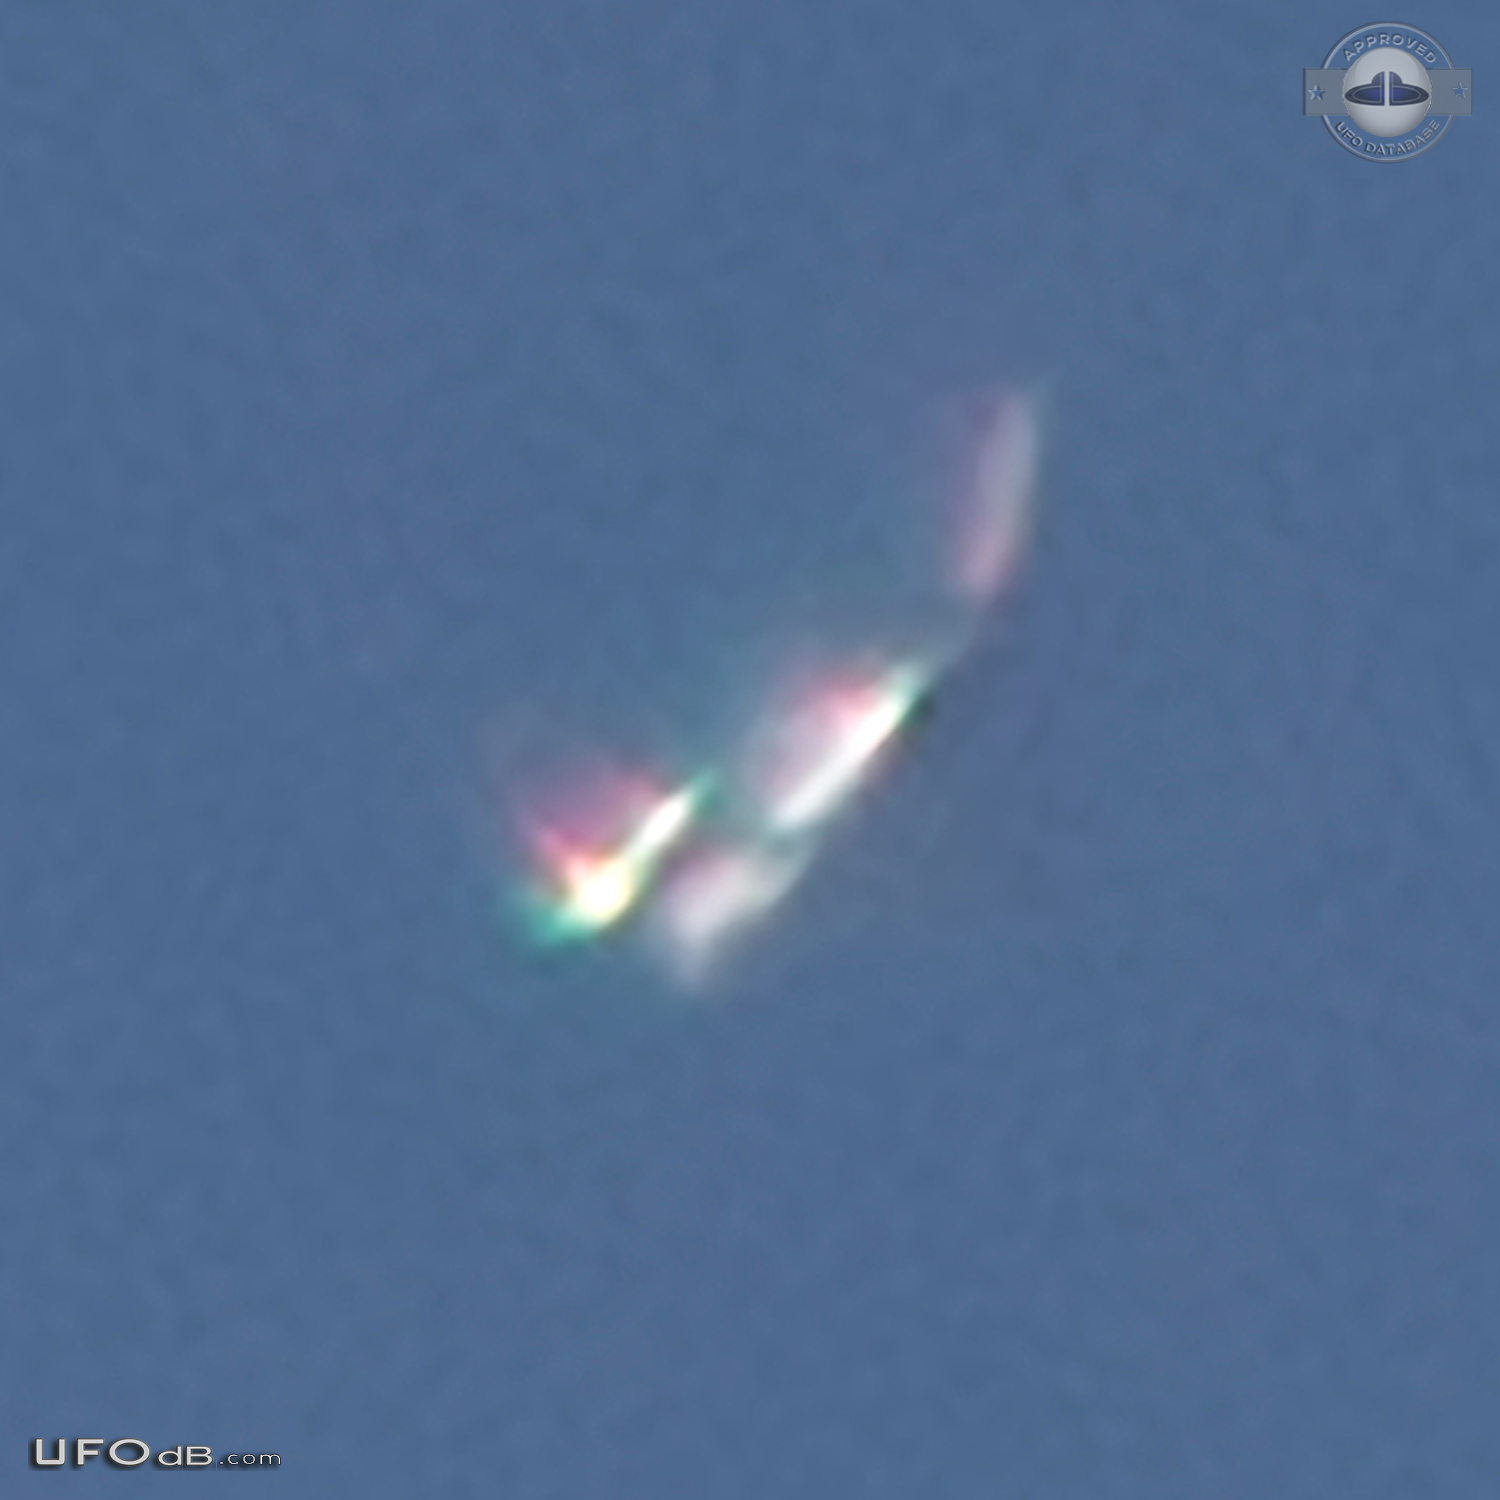 Sequantials Photos of strange UFO over Avaré São Paulo Brazil 2015 UFO Picture #668-3